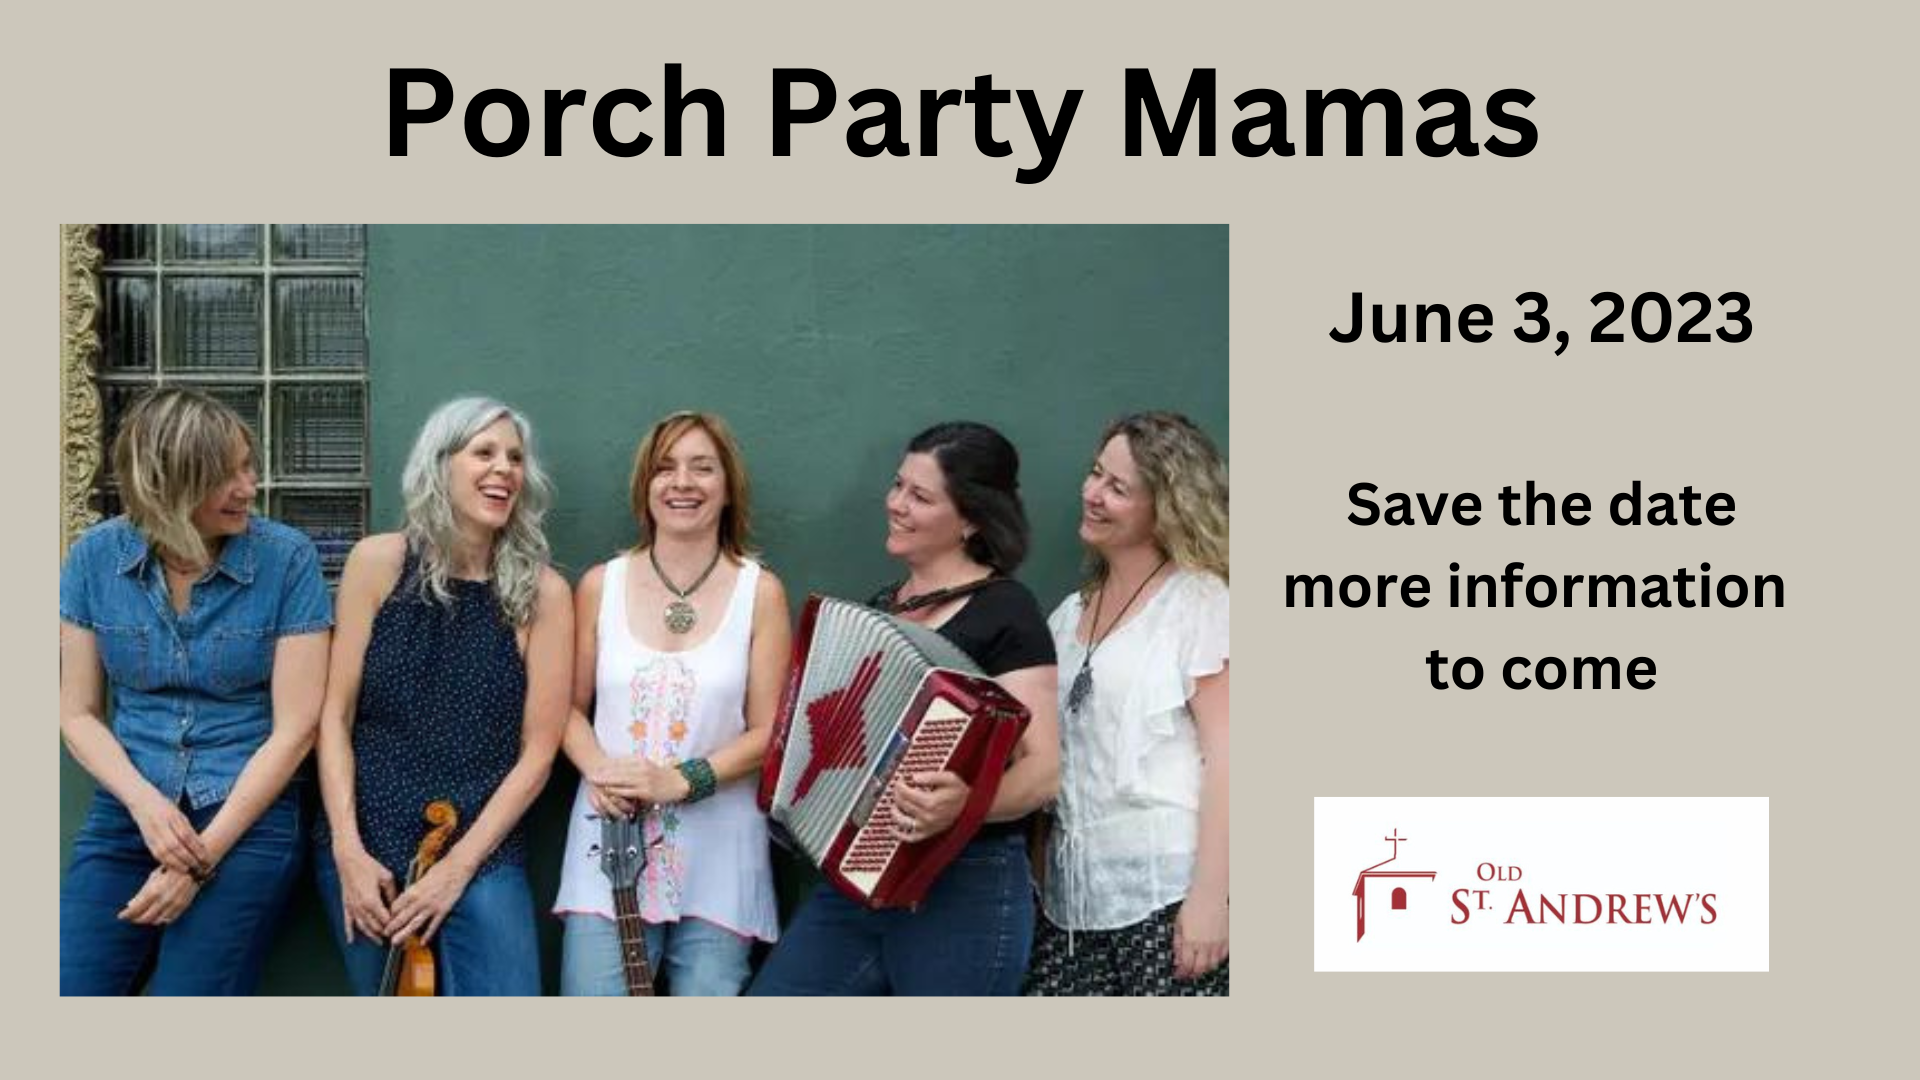 Porch Party Mamas Concert June 3, 2023